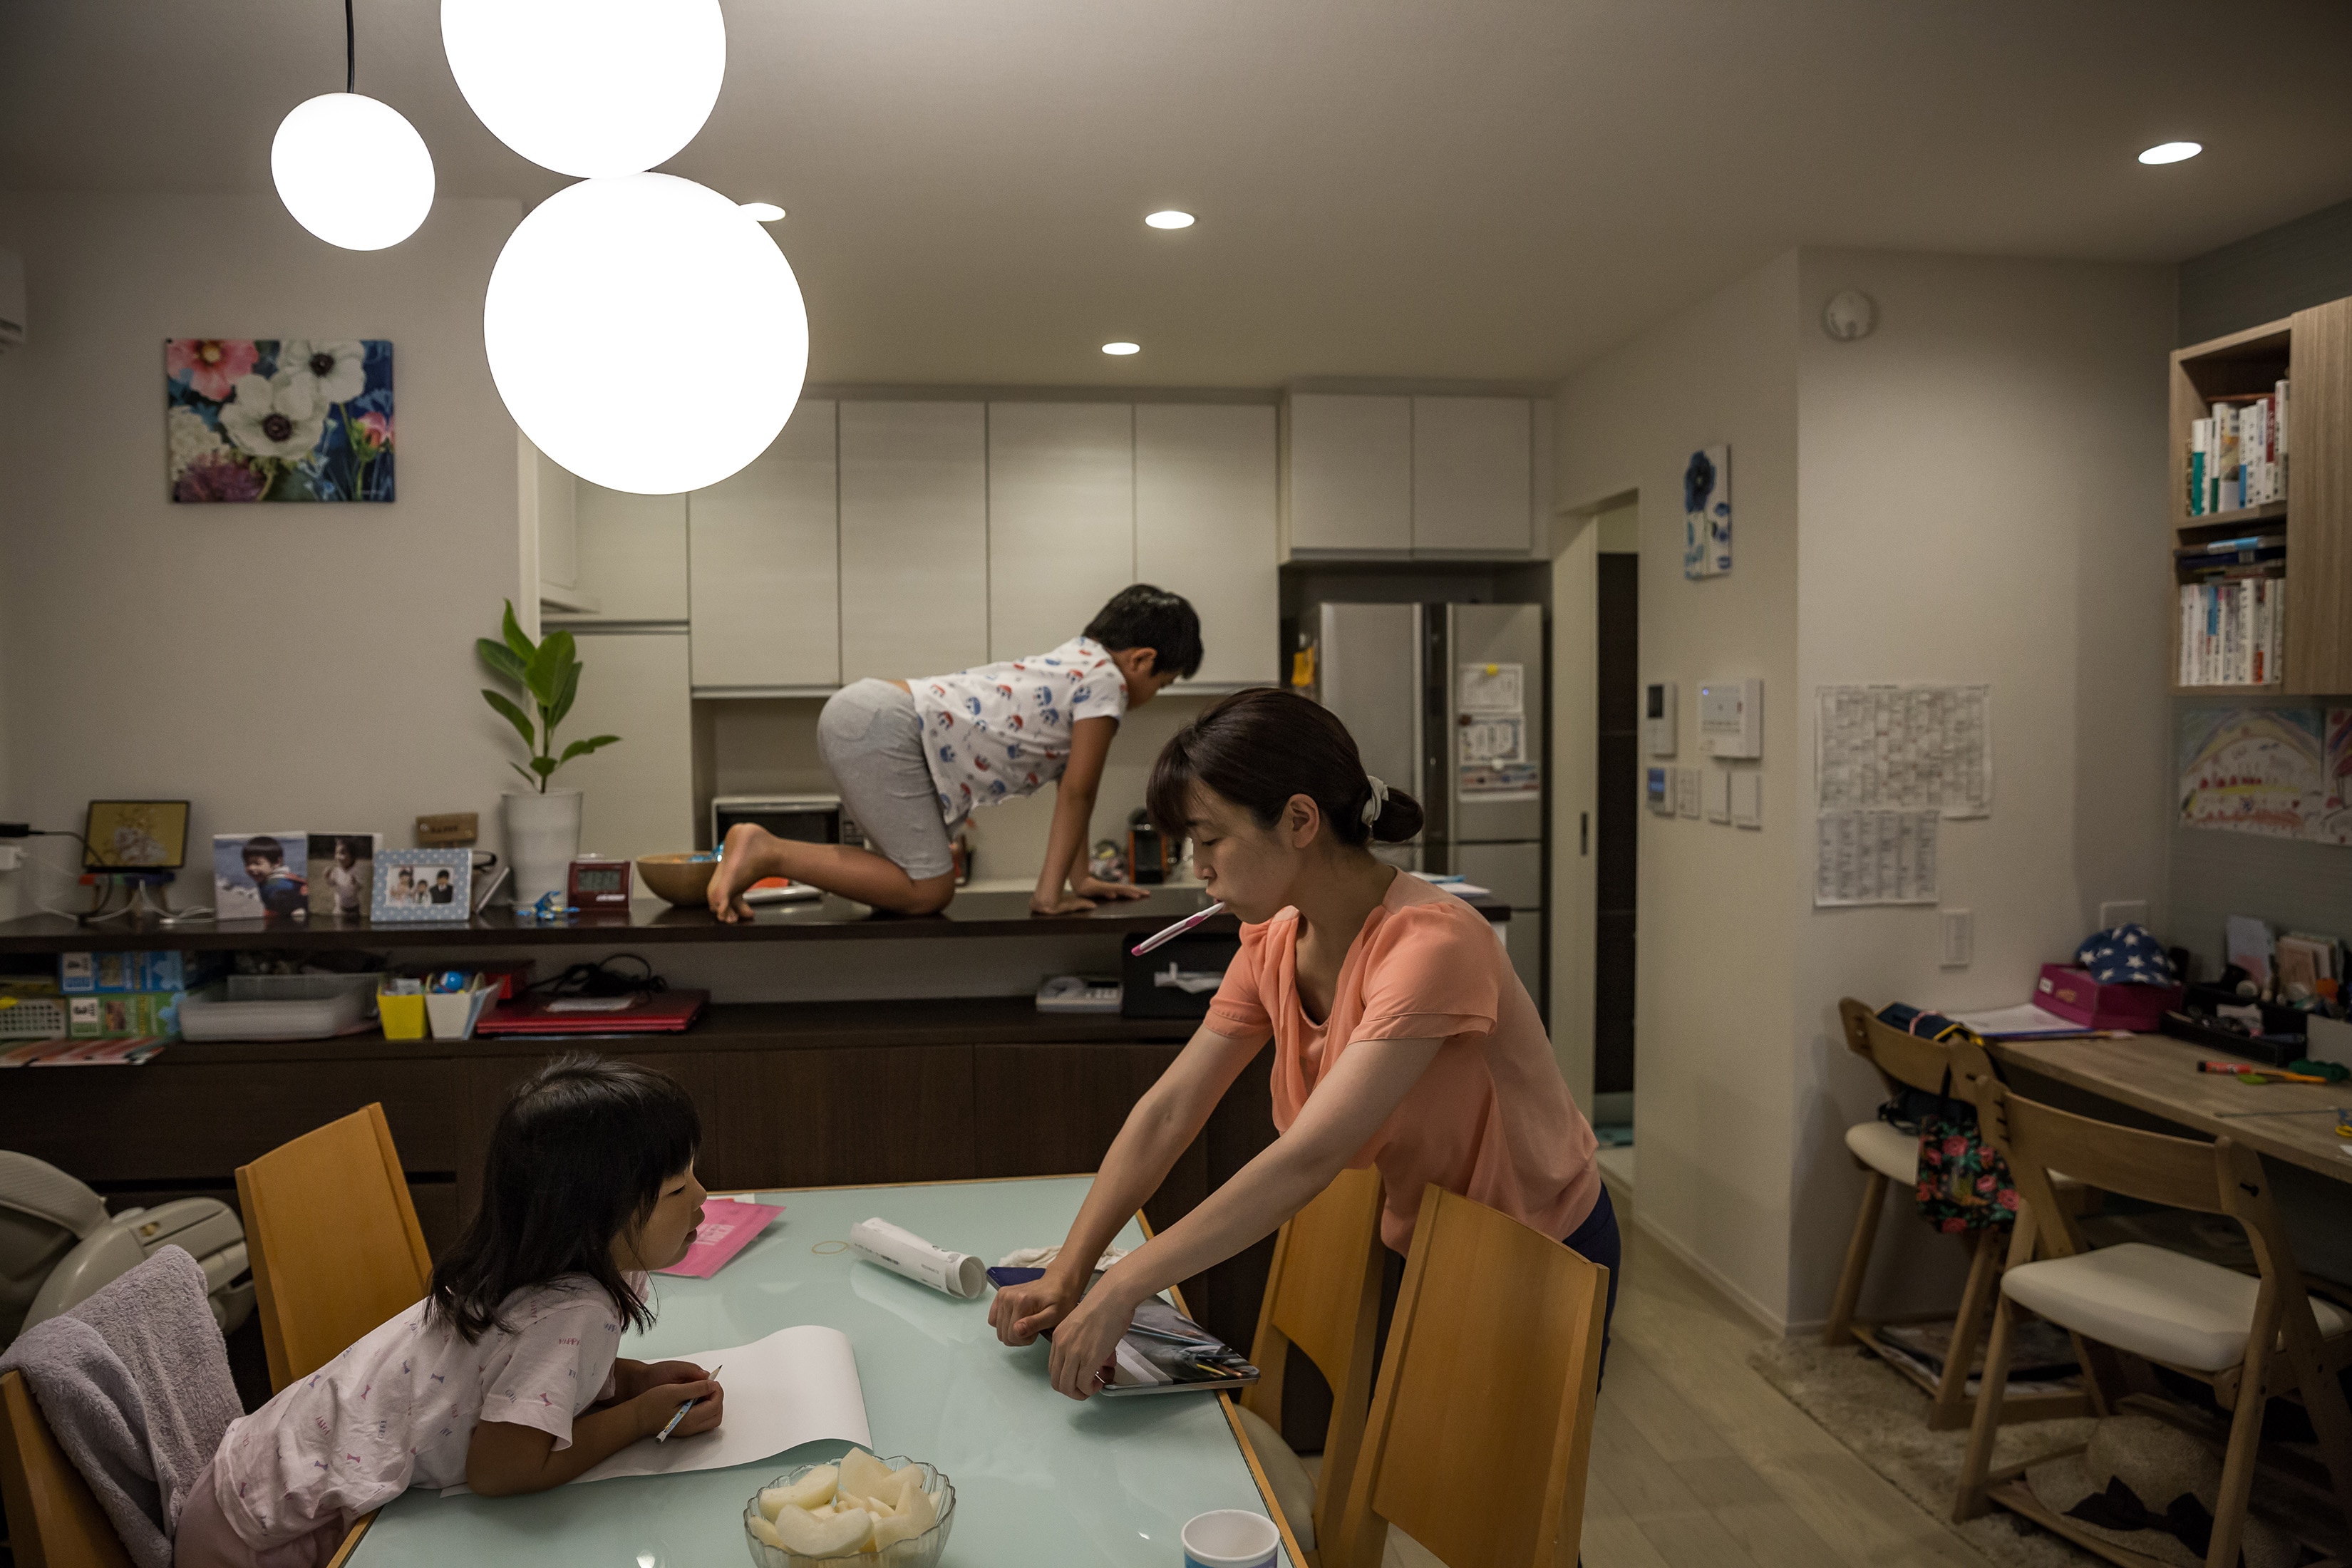 Japan Wants Women In The Office Housework Gets In The Way Sbs News